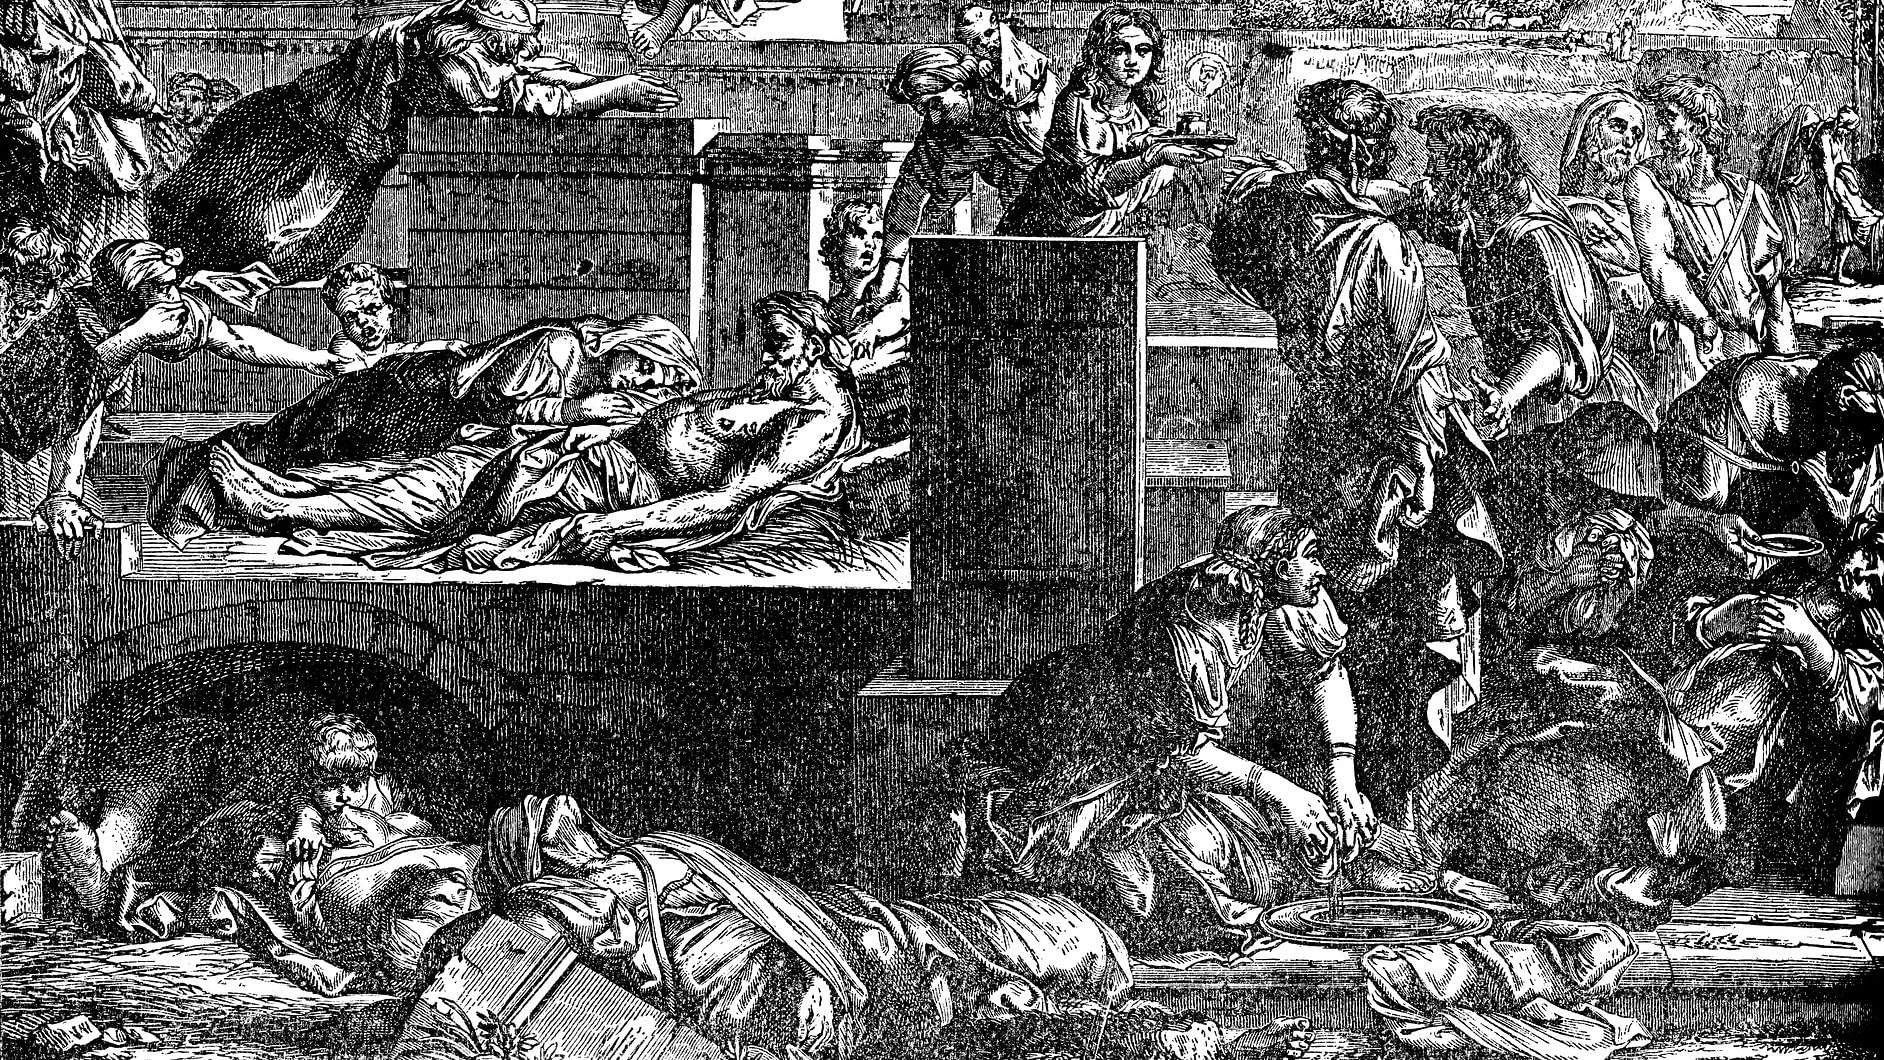 <div class="paragraphs"><p>The Bubonic Plague killed millions in the 1300s.</p></div>